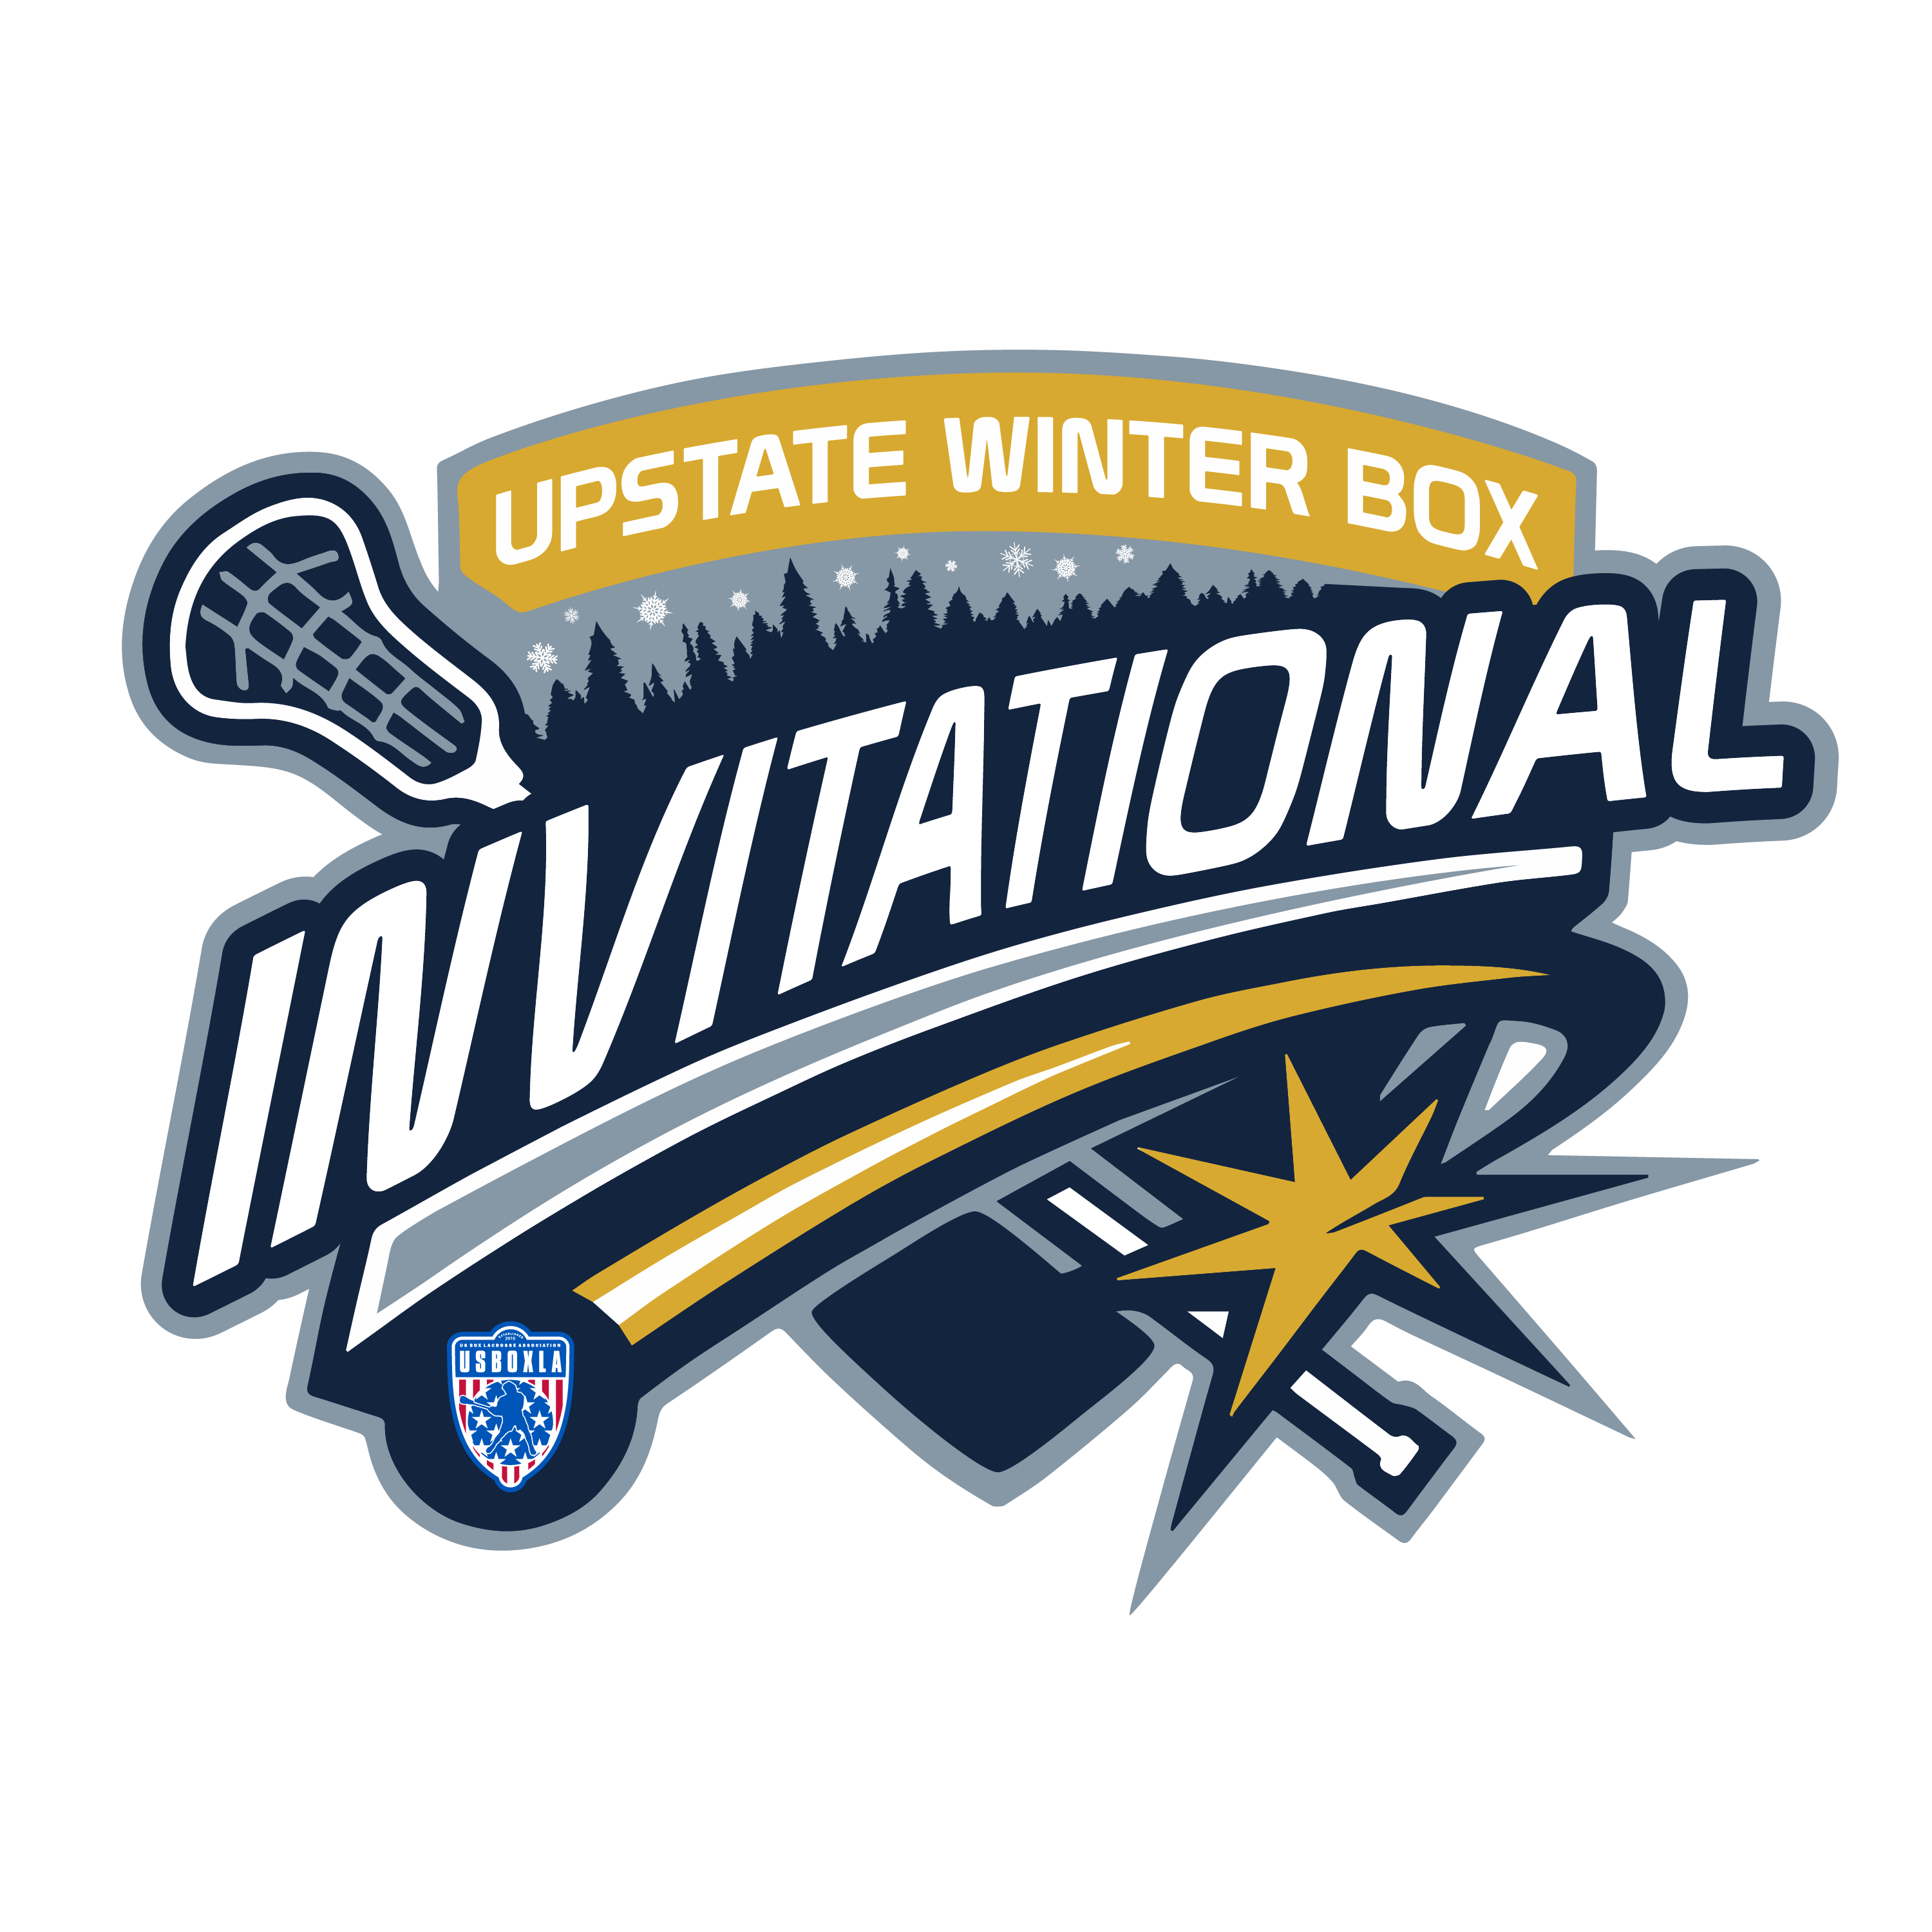 Upstate Winter Box Invitational Logo with league logo - FINAL-01 copy